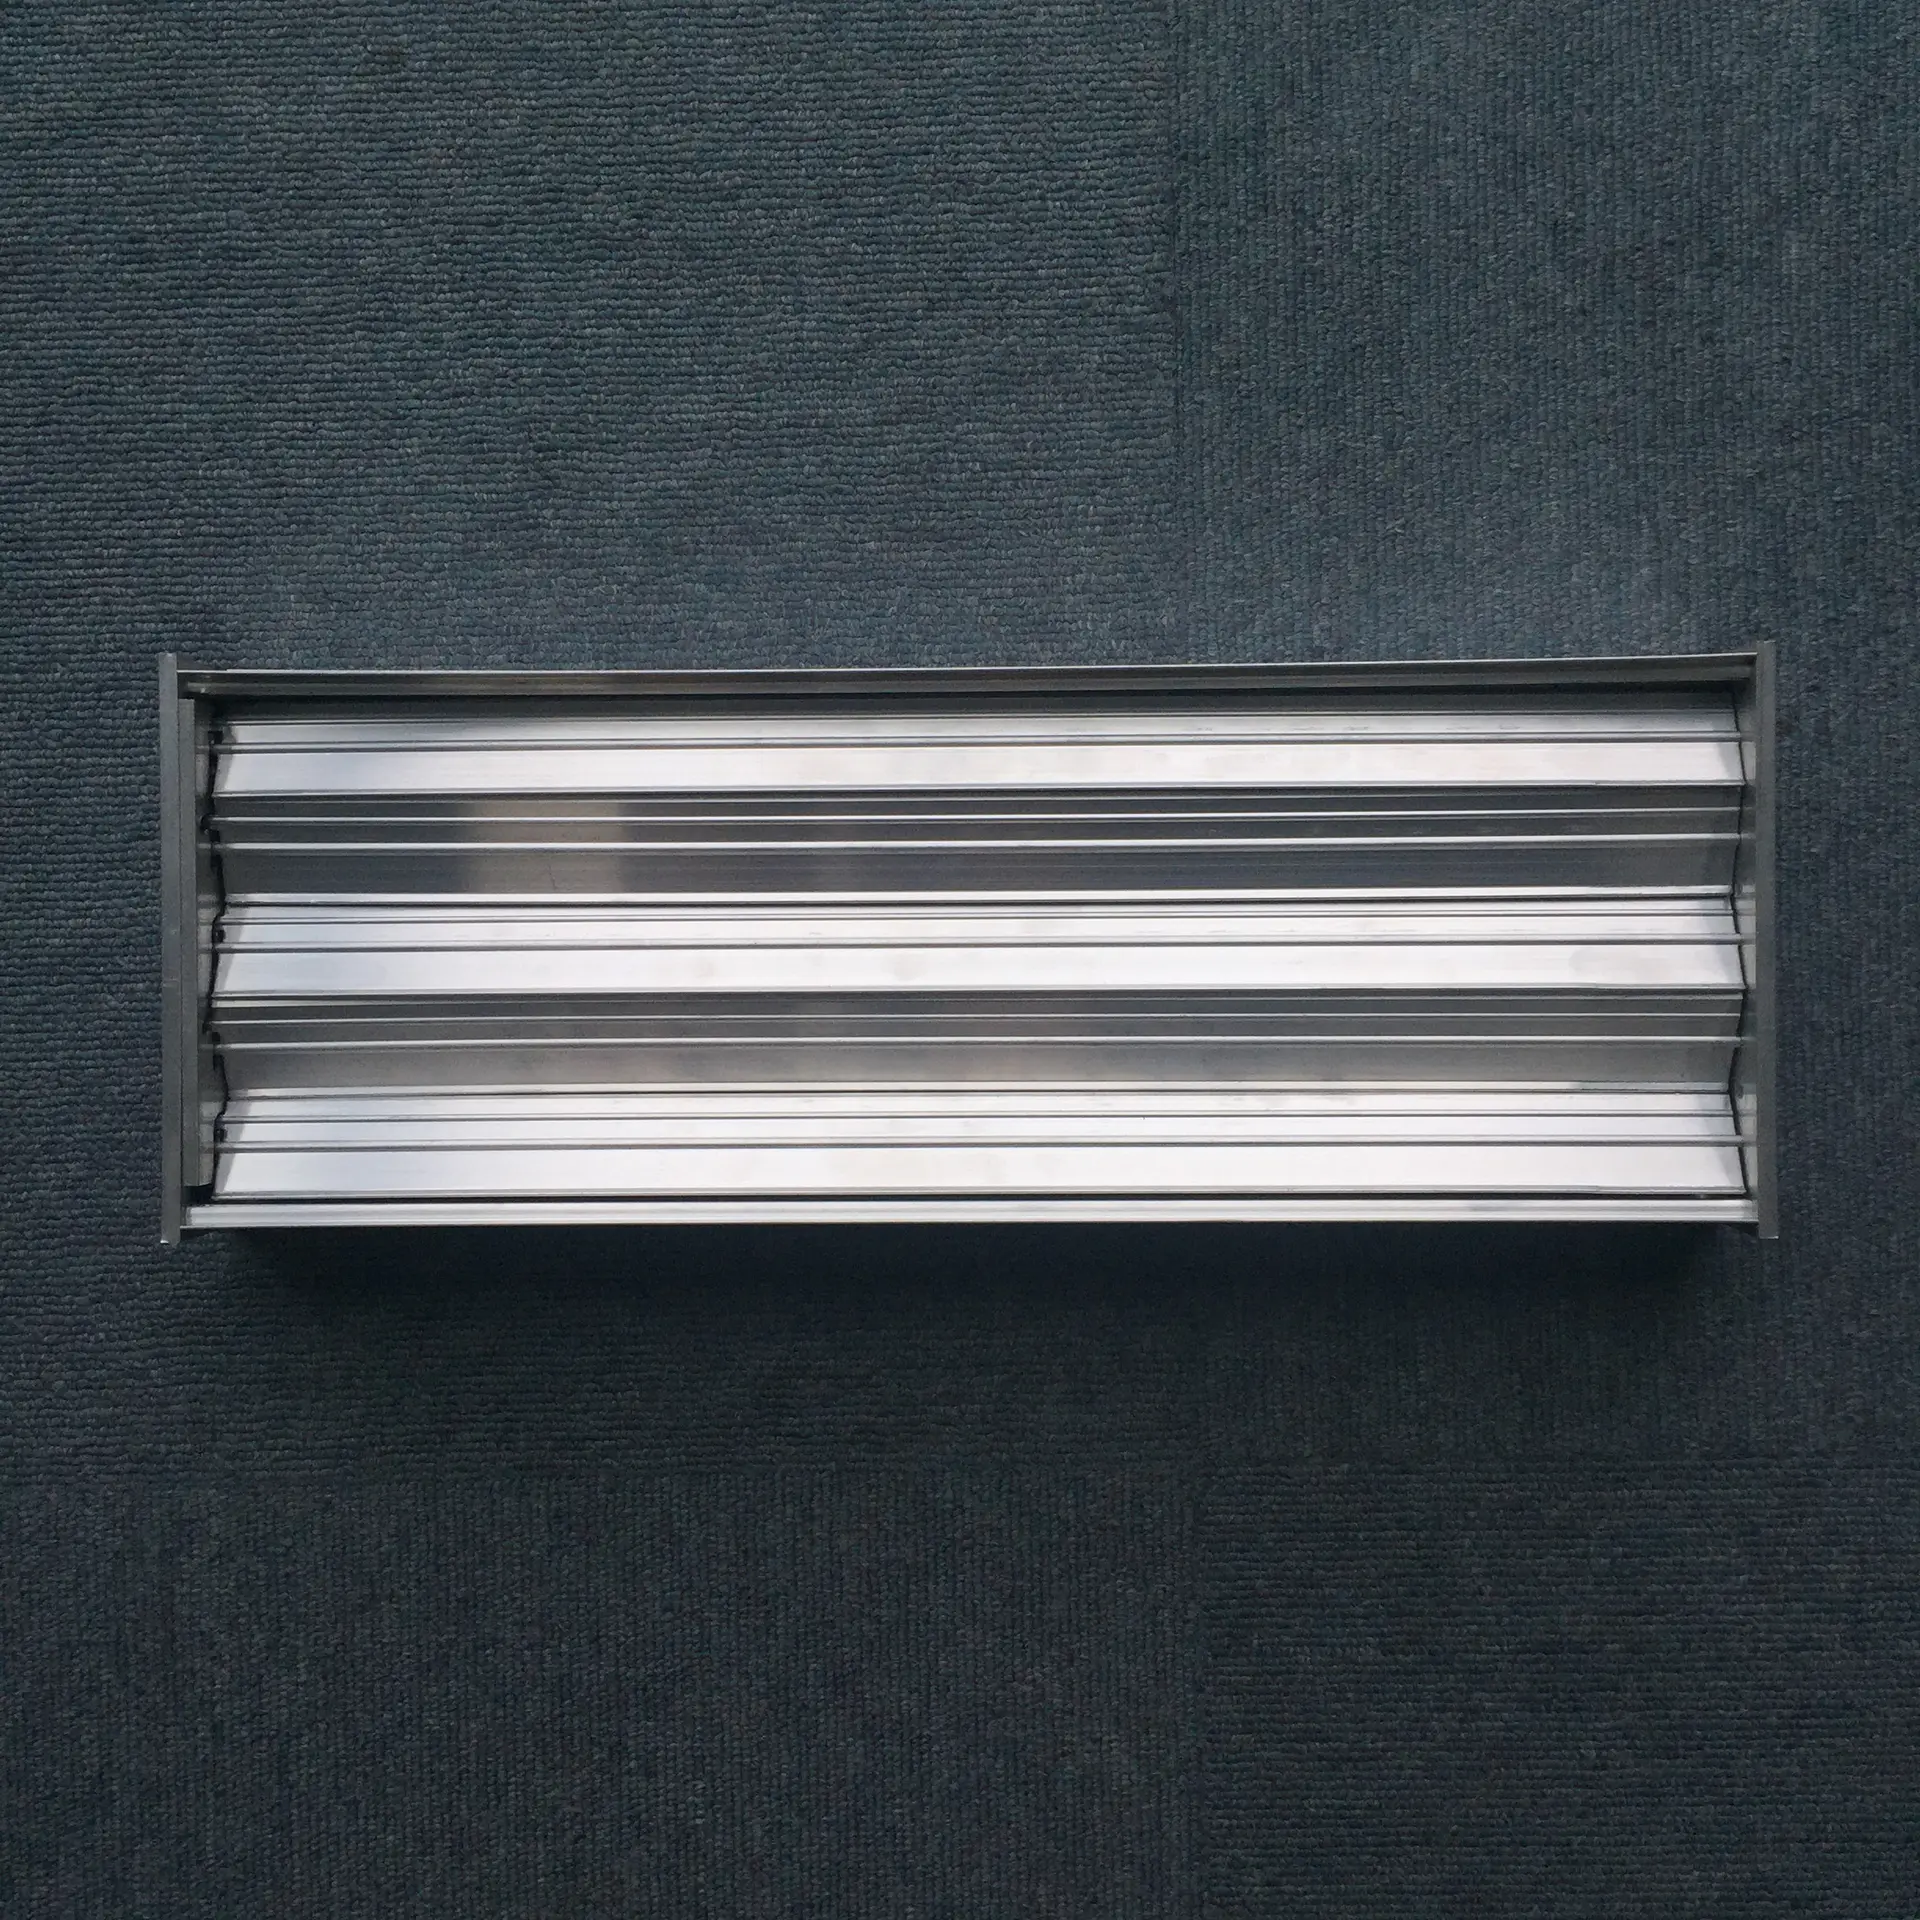 HVAC Aluminum  Air Grille Mounting Opposed Blades Damper for Ventilation